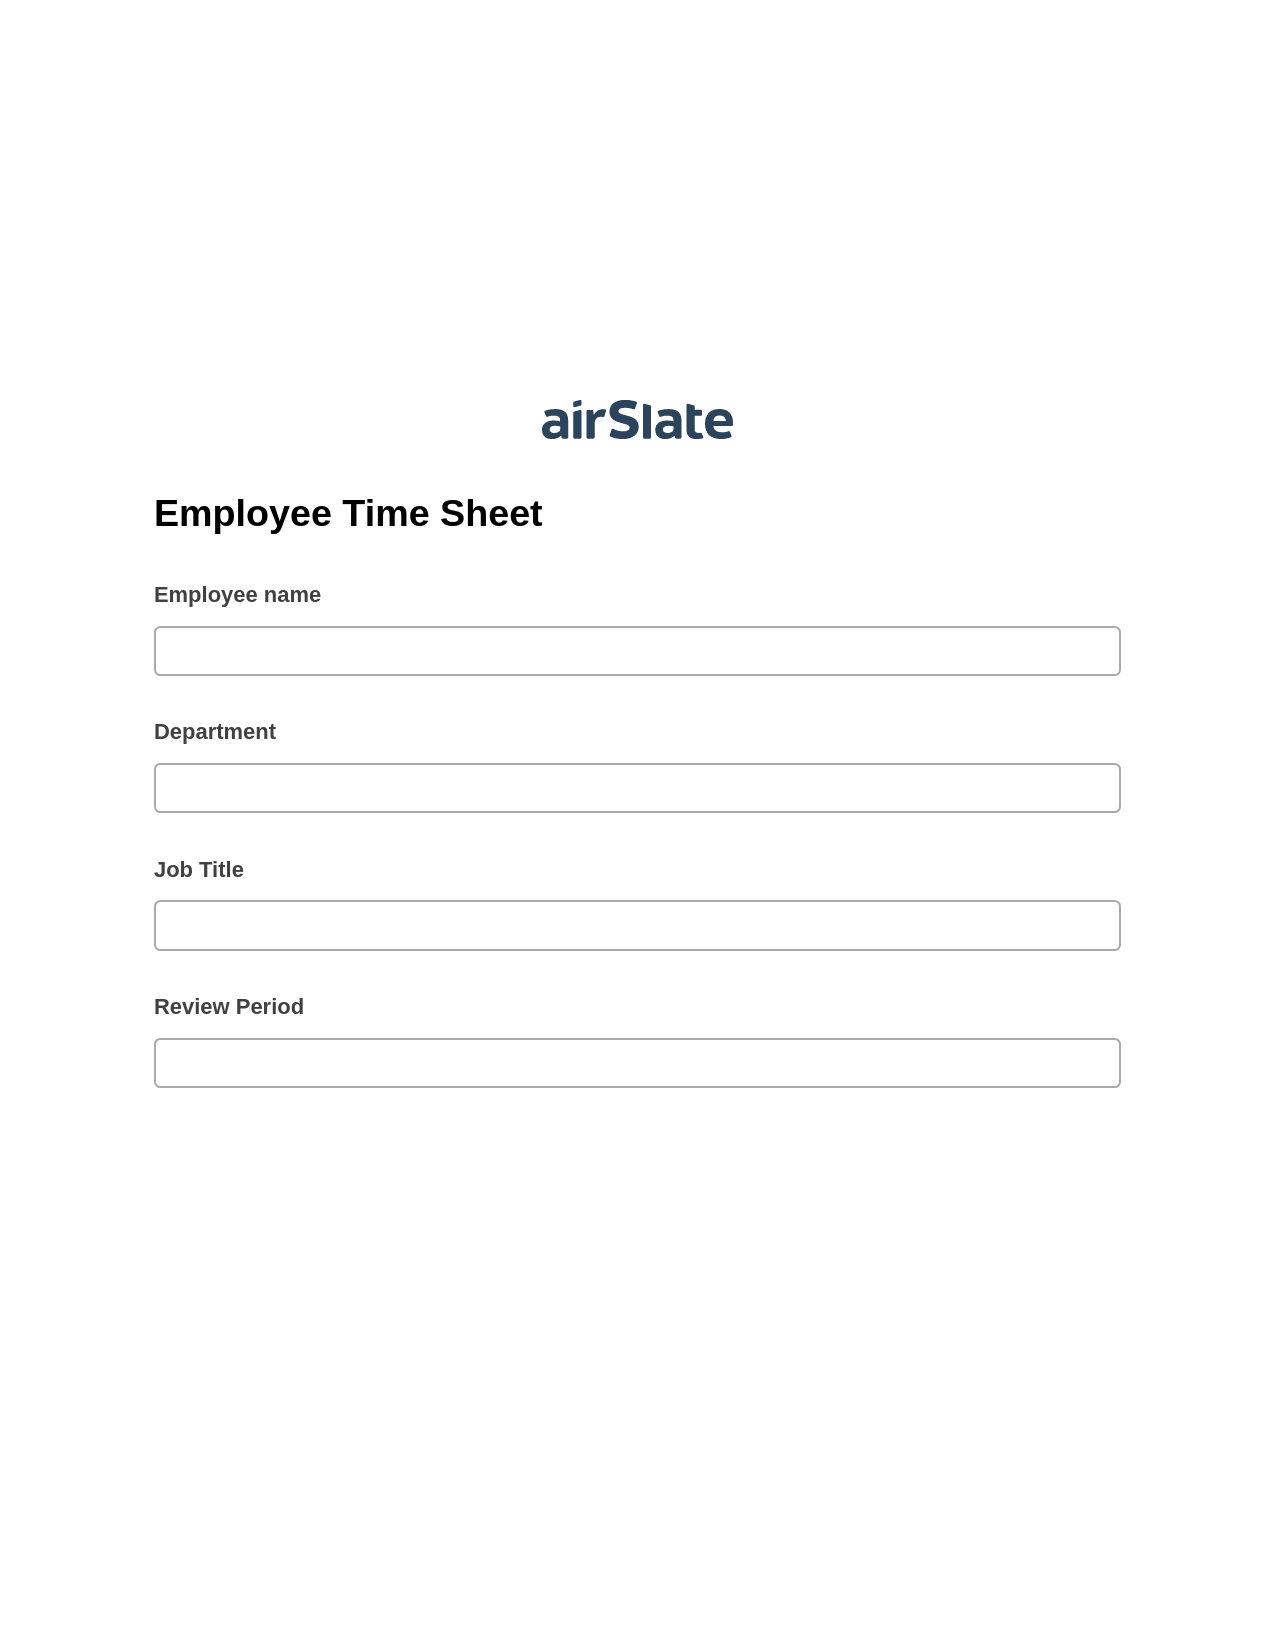 Employee Time Sheet Pre-fill Document Bot, Remove Slate Bot, Webhook Postfinish Bot